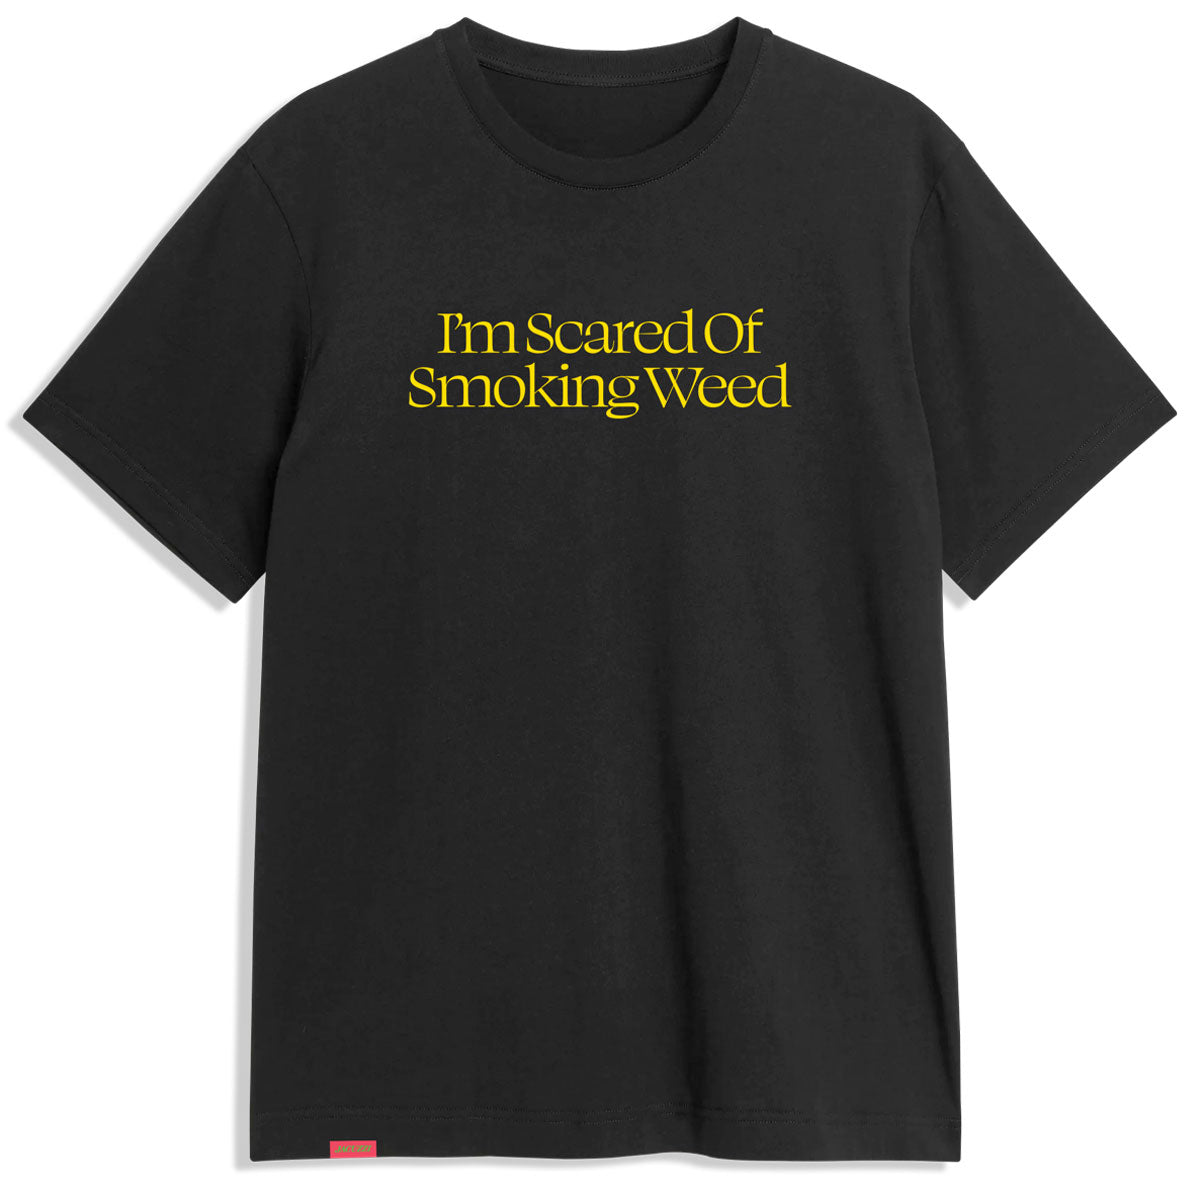 Jacuzzi Scared Weed T-Shirt - Black image 1